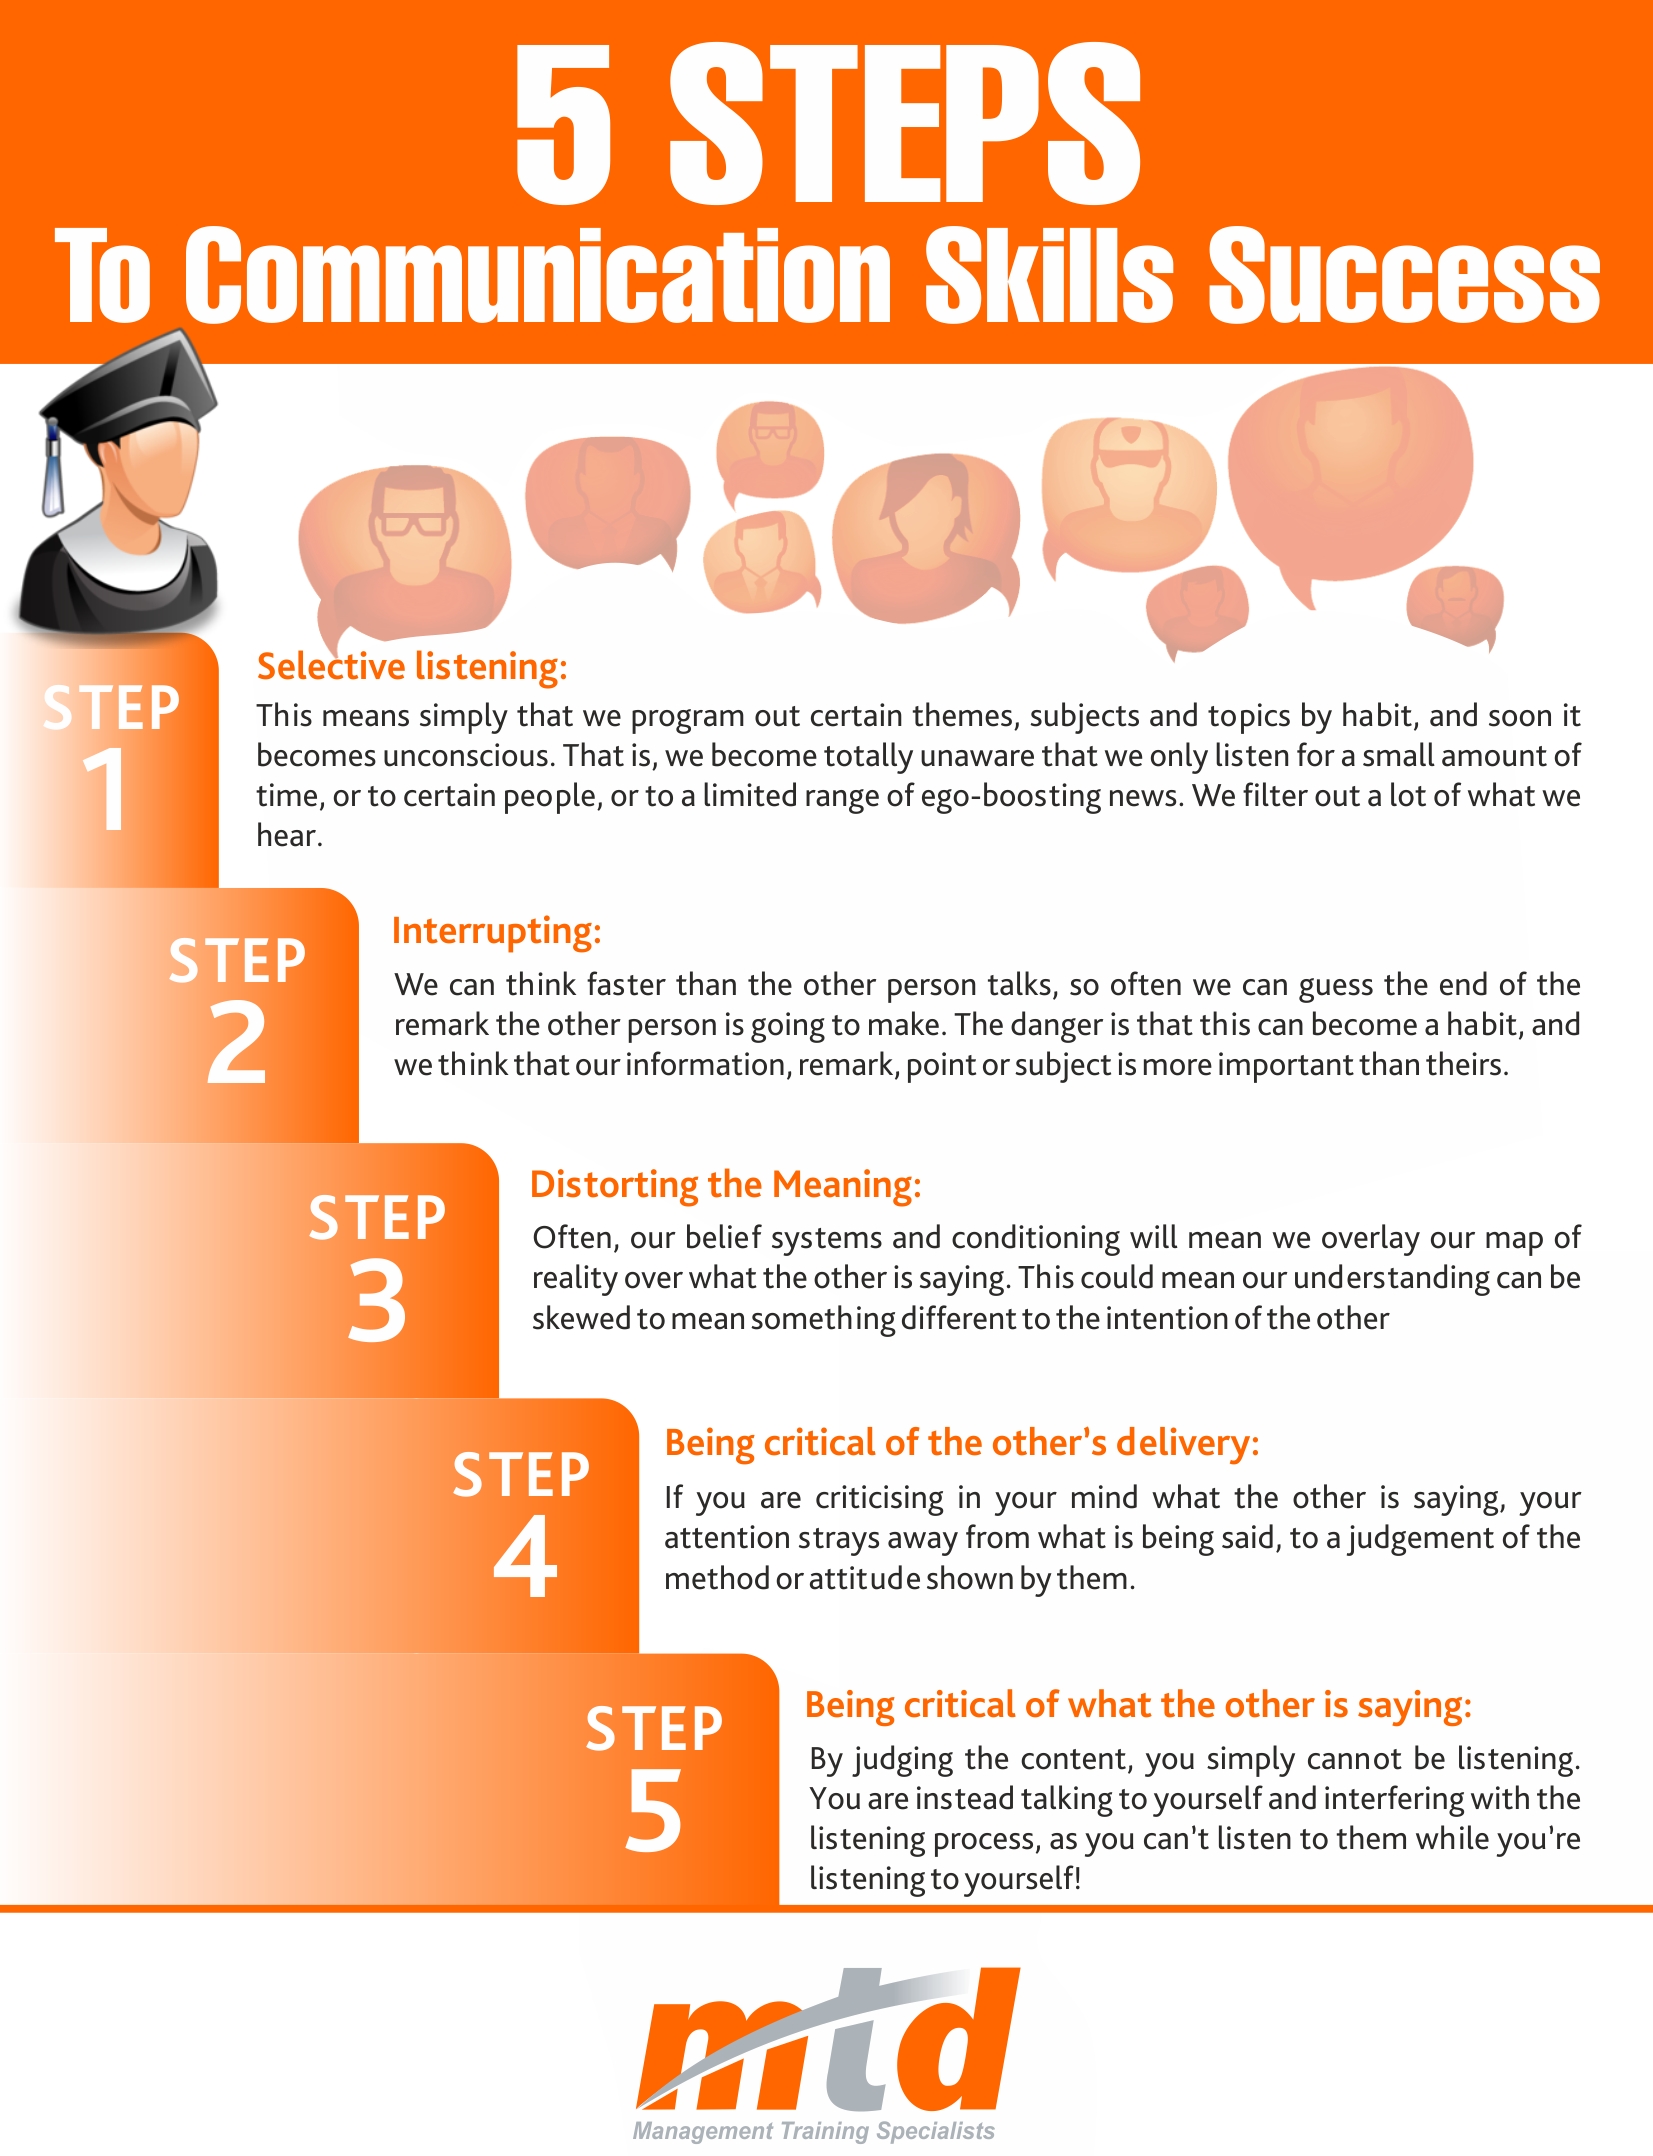 draft a presentation on effective ways to improve communication skills